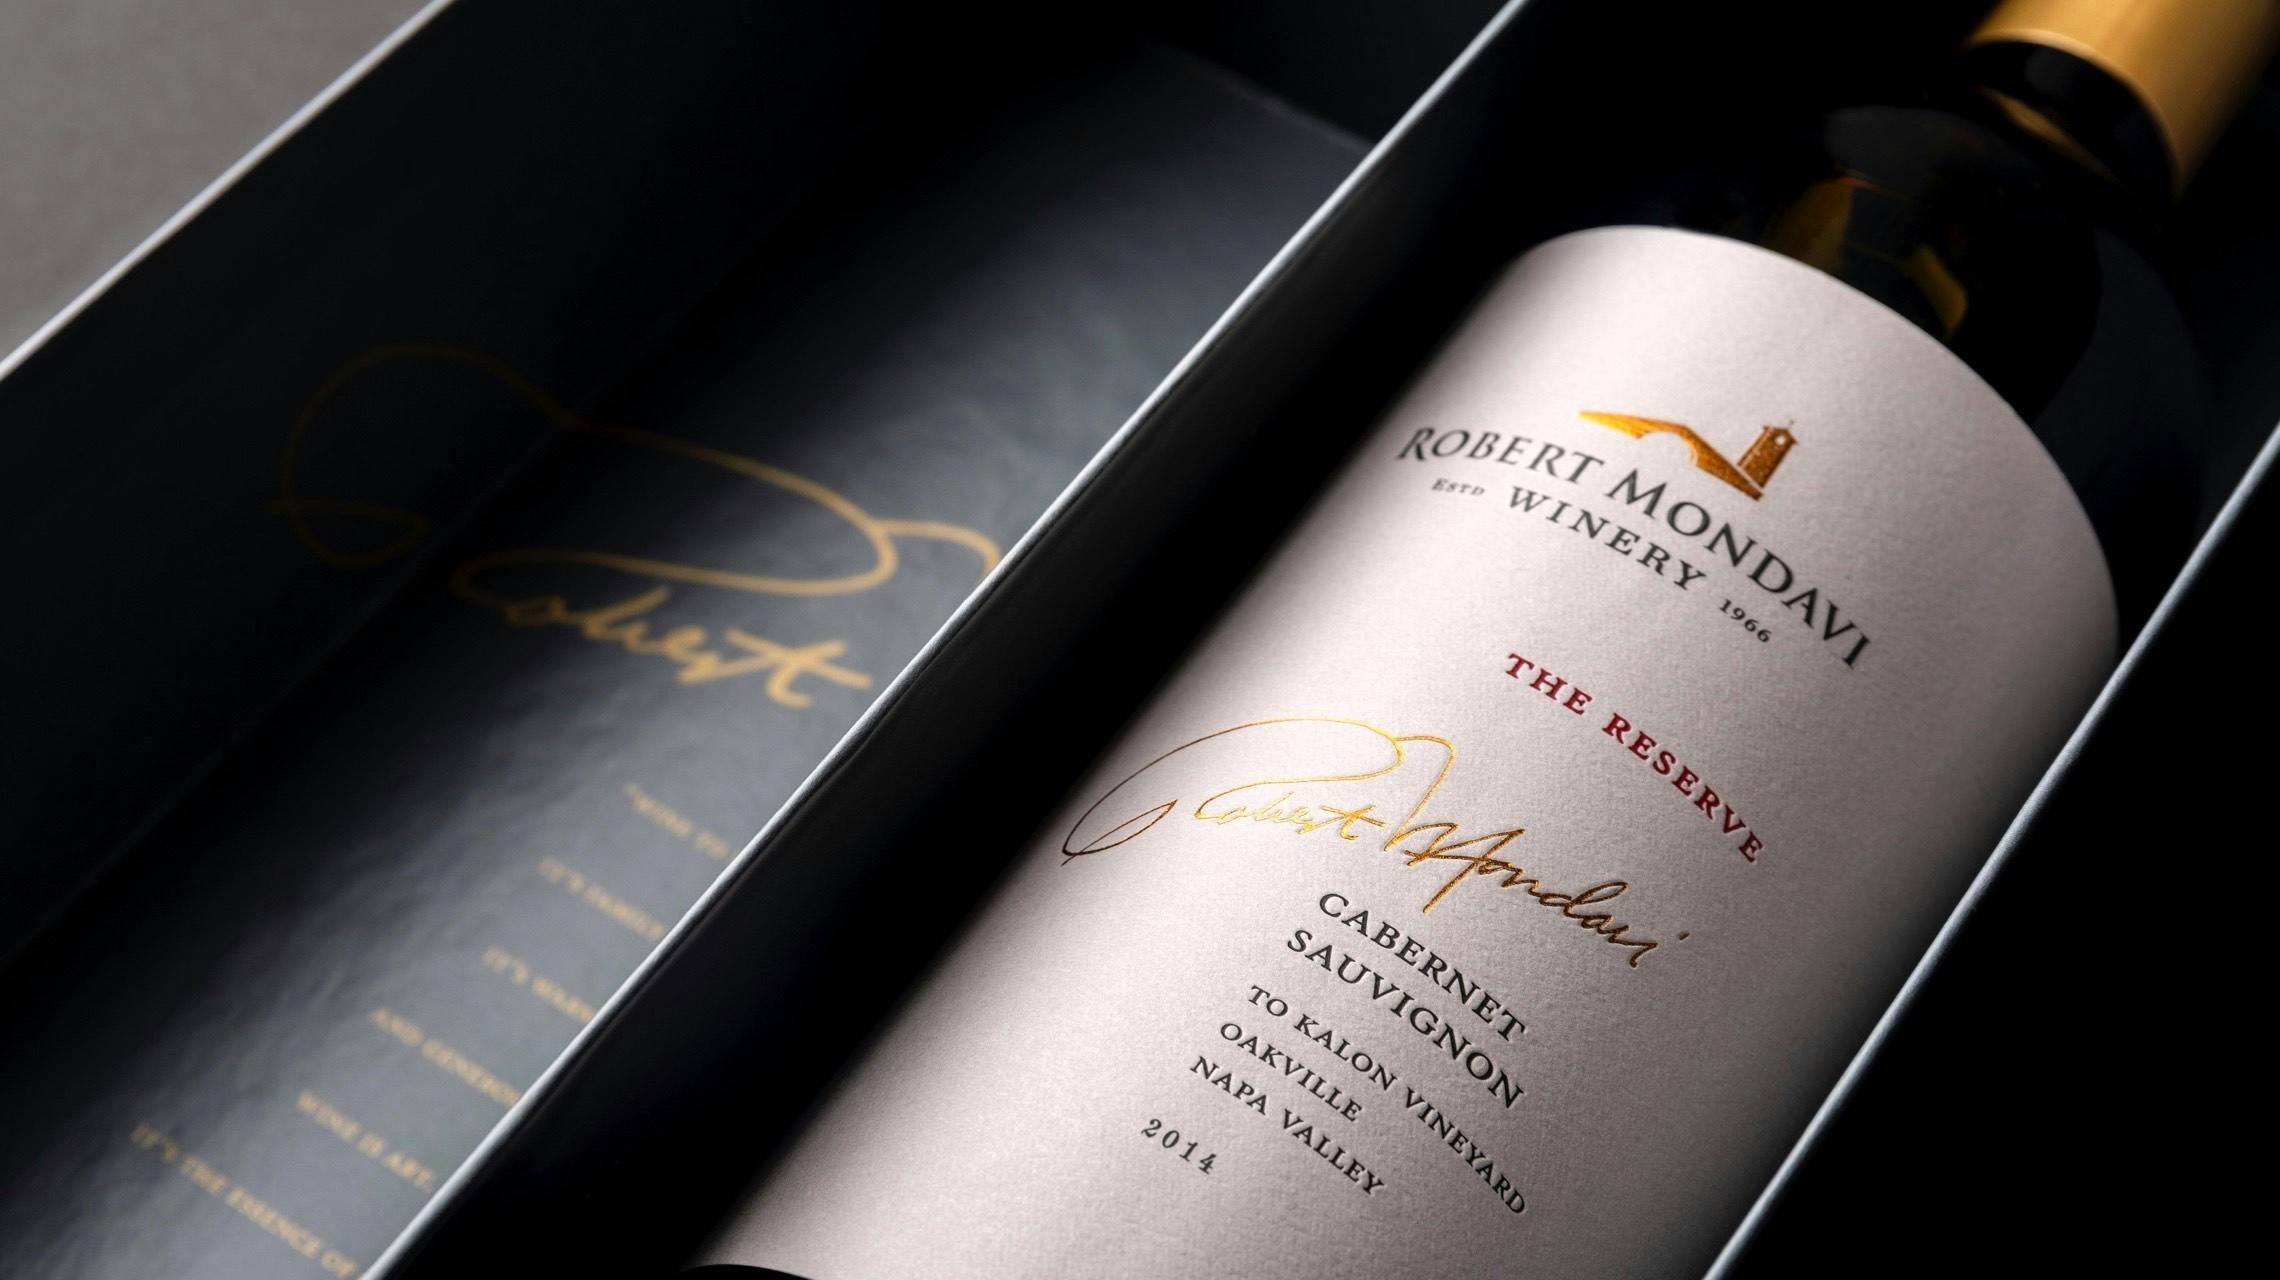 Robert Mondavi Winery: The Reserve Release Kit